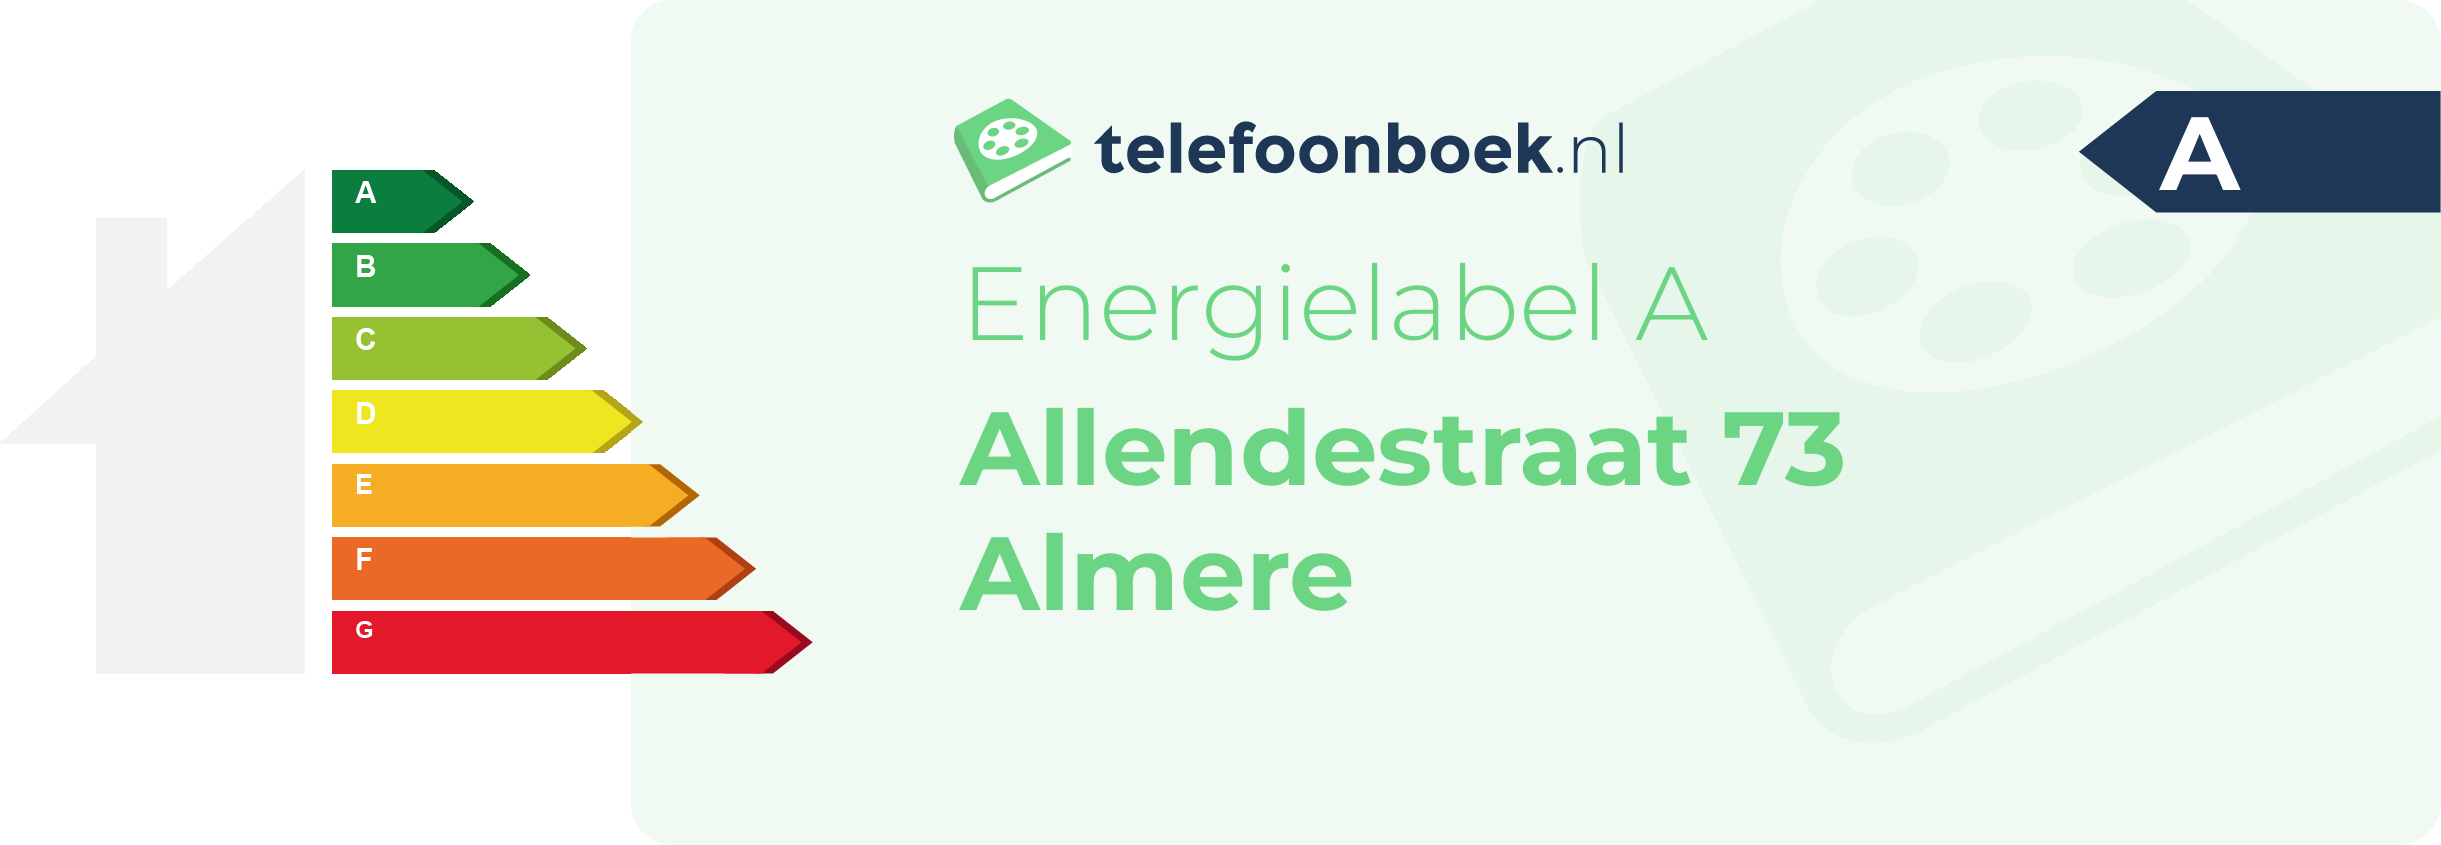 Energielabel Allendestraat 73 Almere